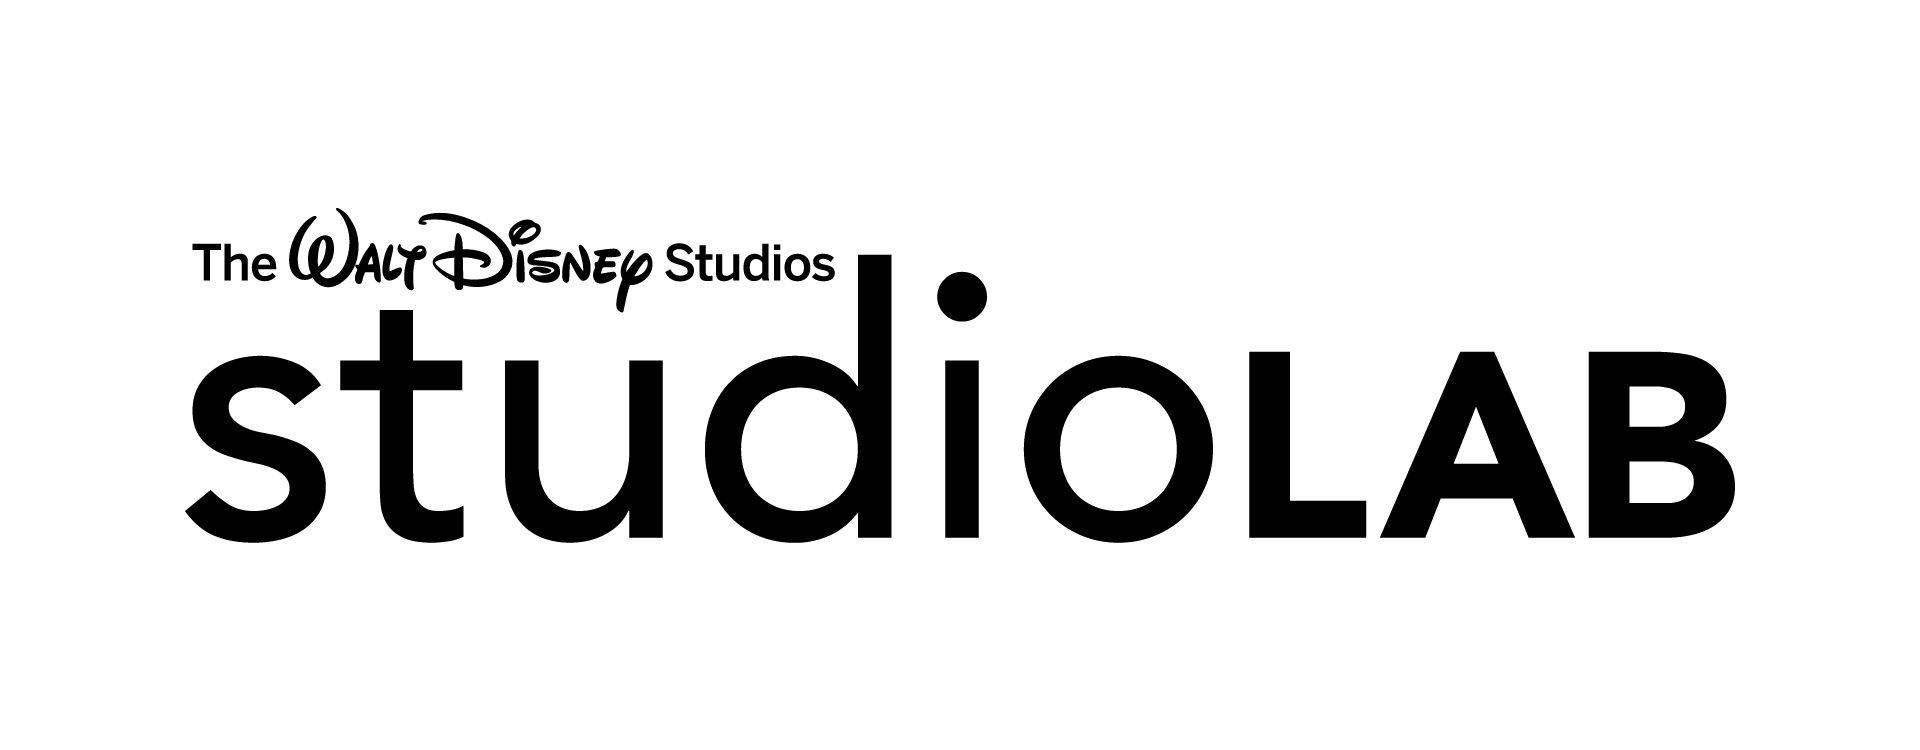 The Walt Disney Studios Logo - The Walt Disney Studios Selects Cisco as an Innovation Partner | The ...